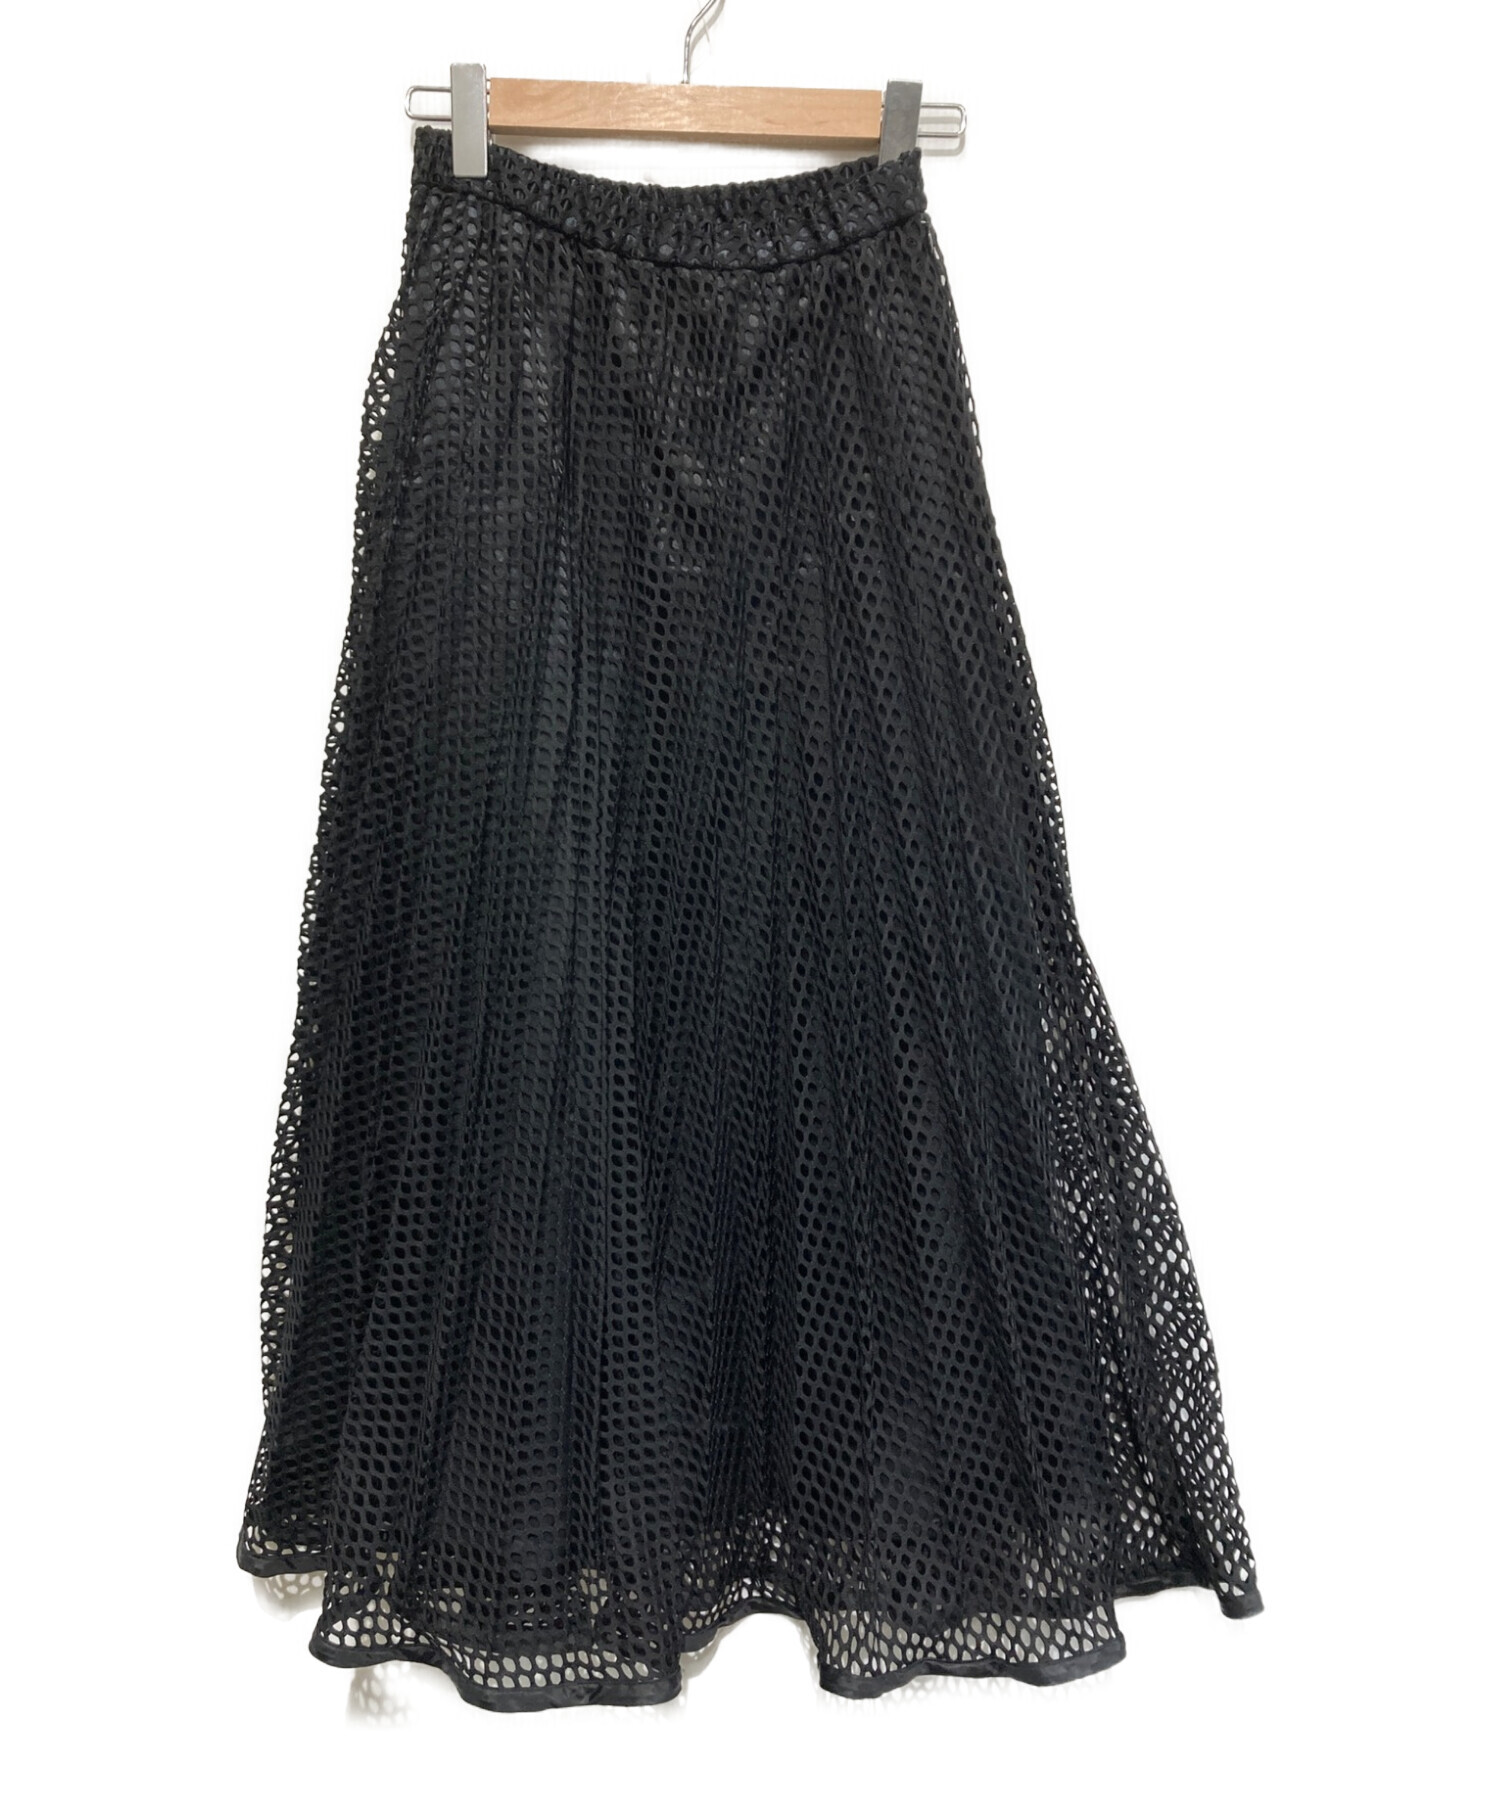 UN3D. (アンスリード) メッシュオリガミプリーツスカート ブラック サイズ:SIZE 38